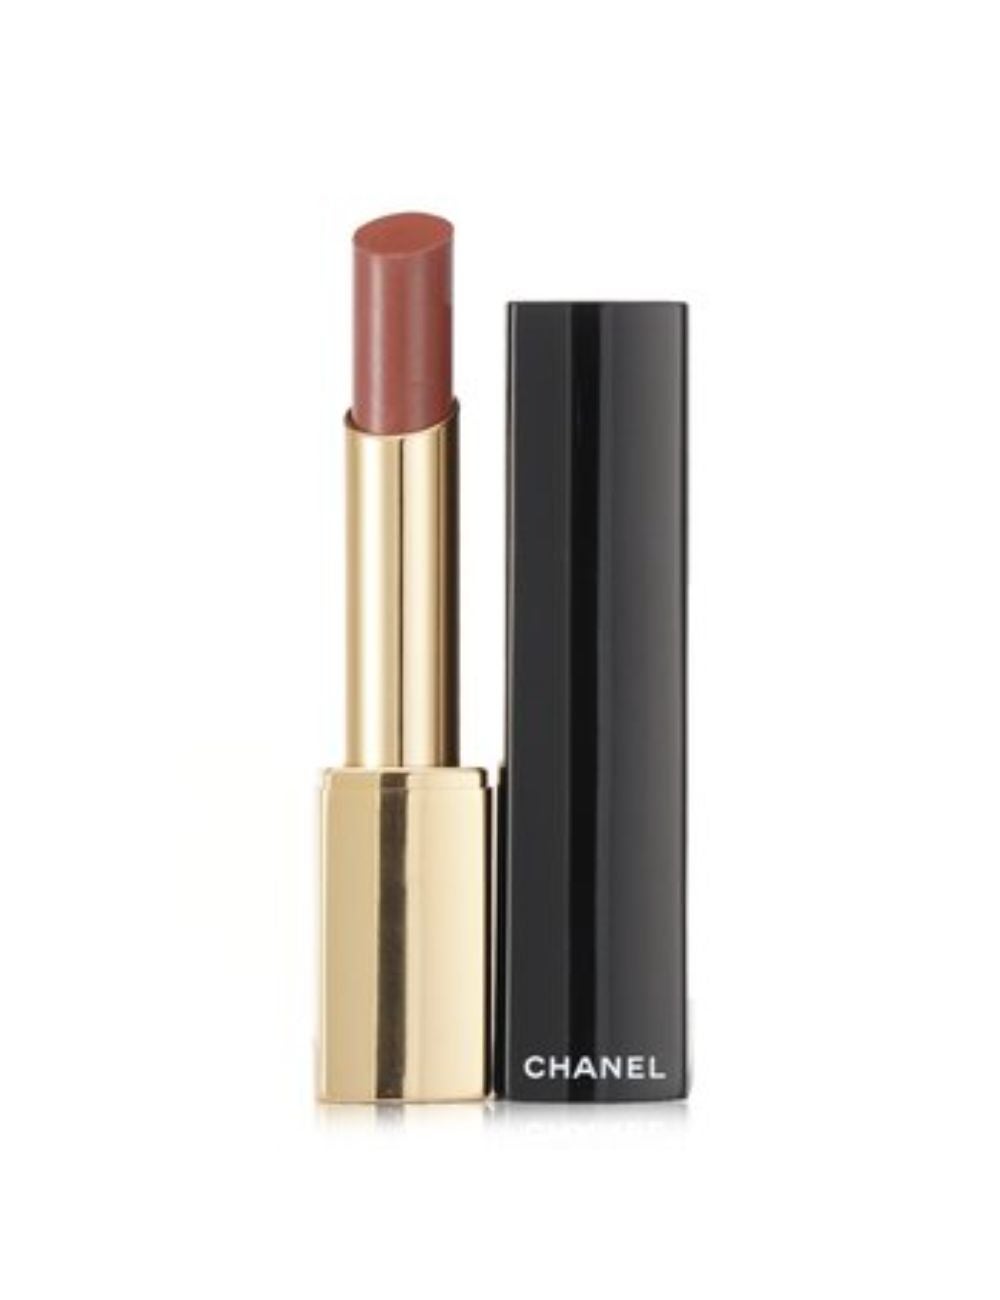 Chanel - Rouge Allure L'extrait Lipstick - # 812 Beige Brut 2g/0.07oz